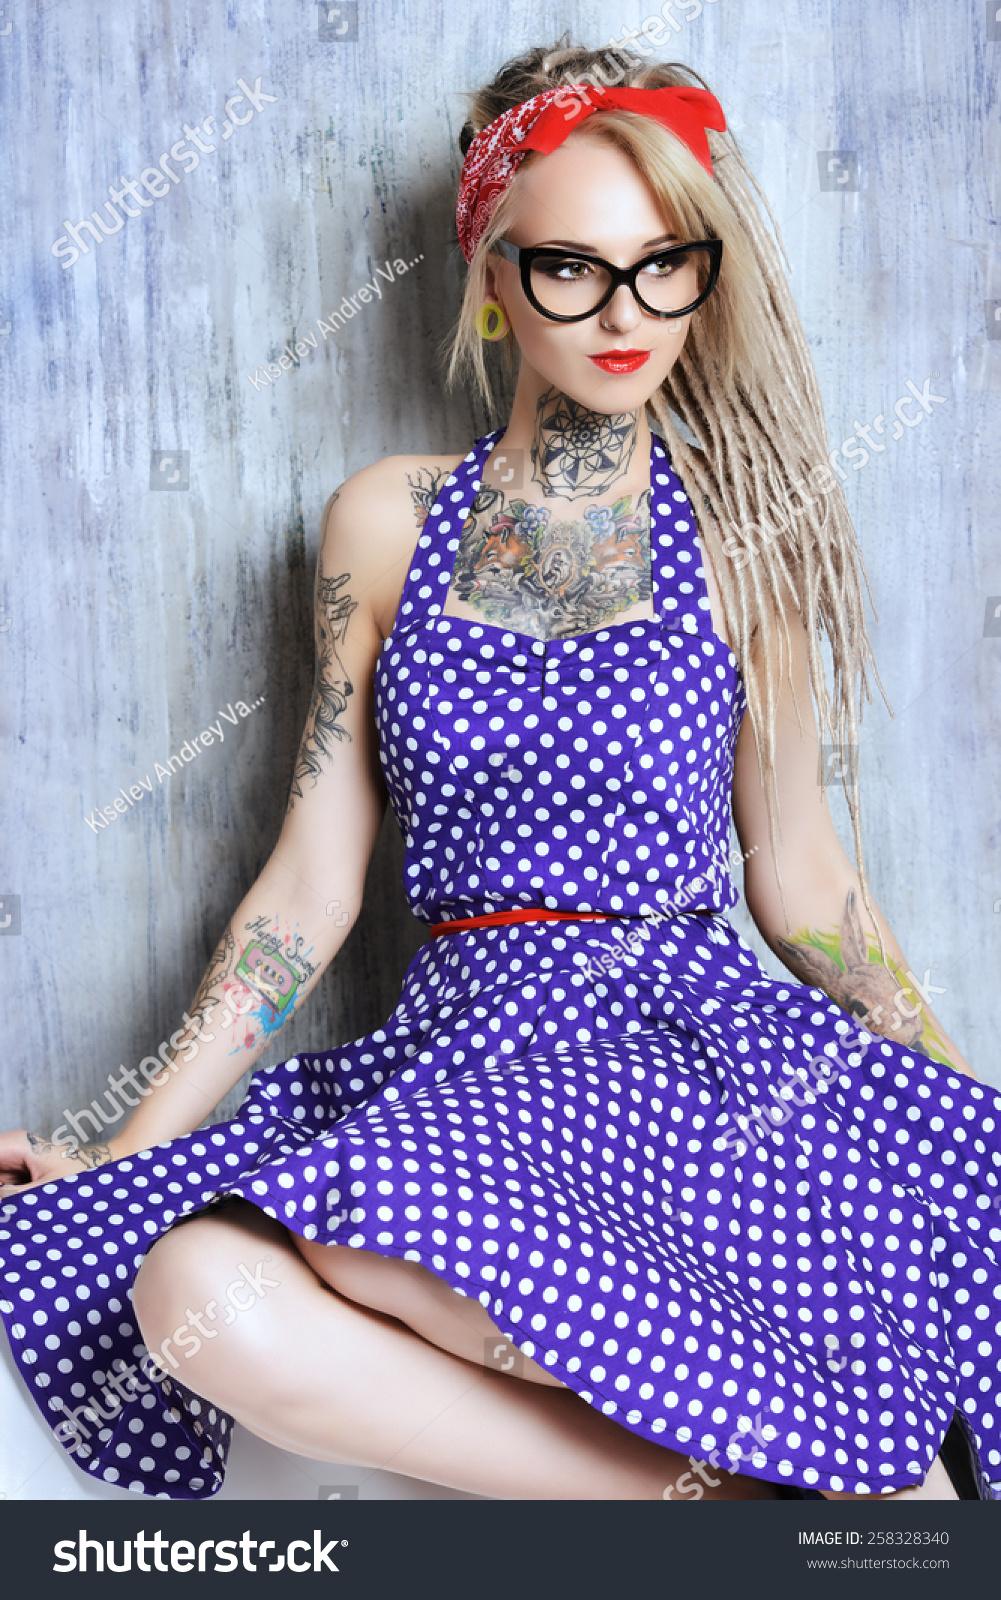 old fashioned polka dot dress